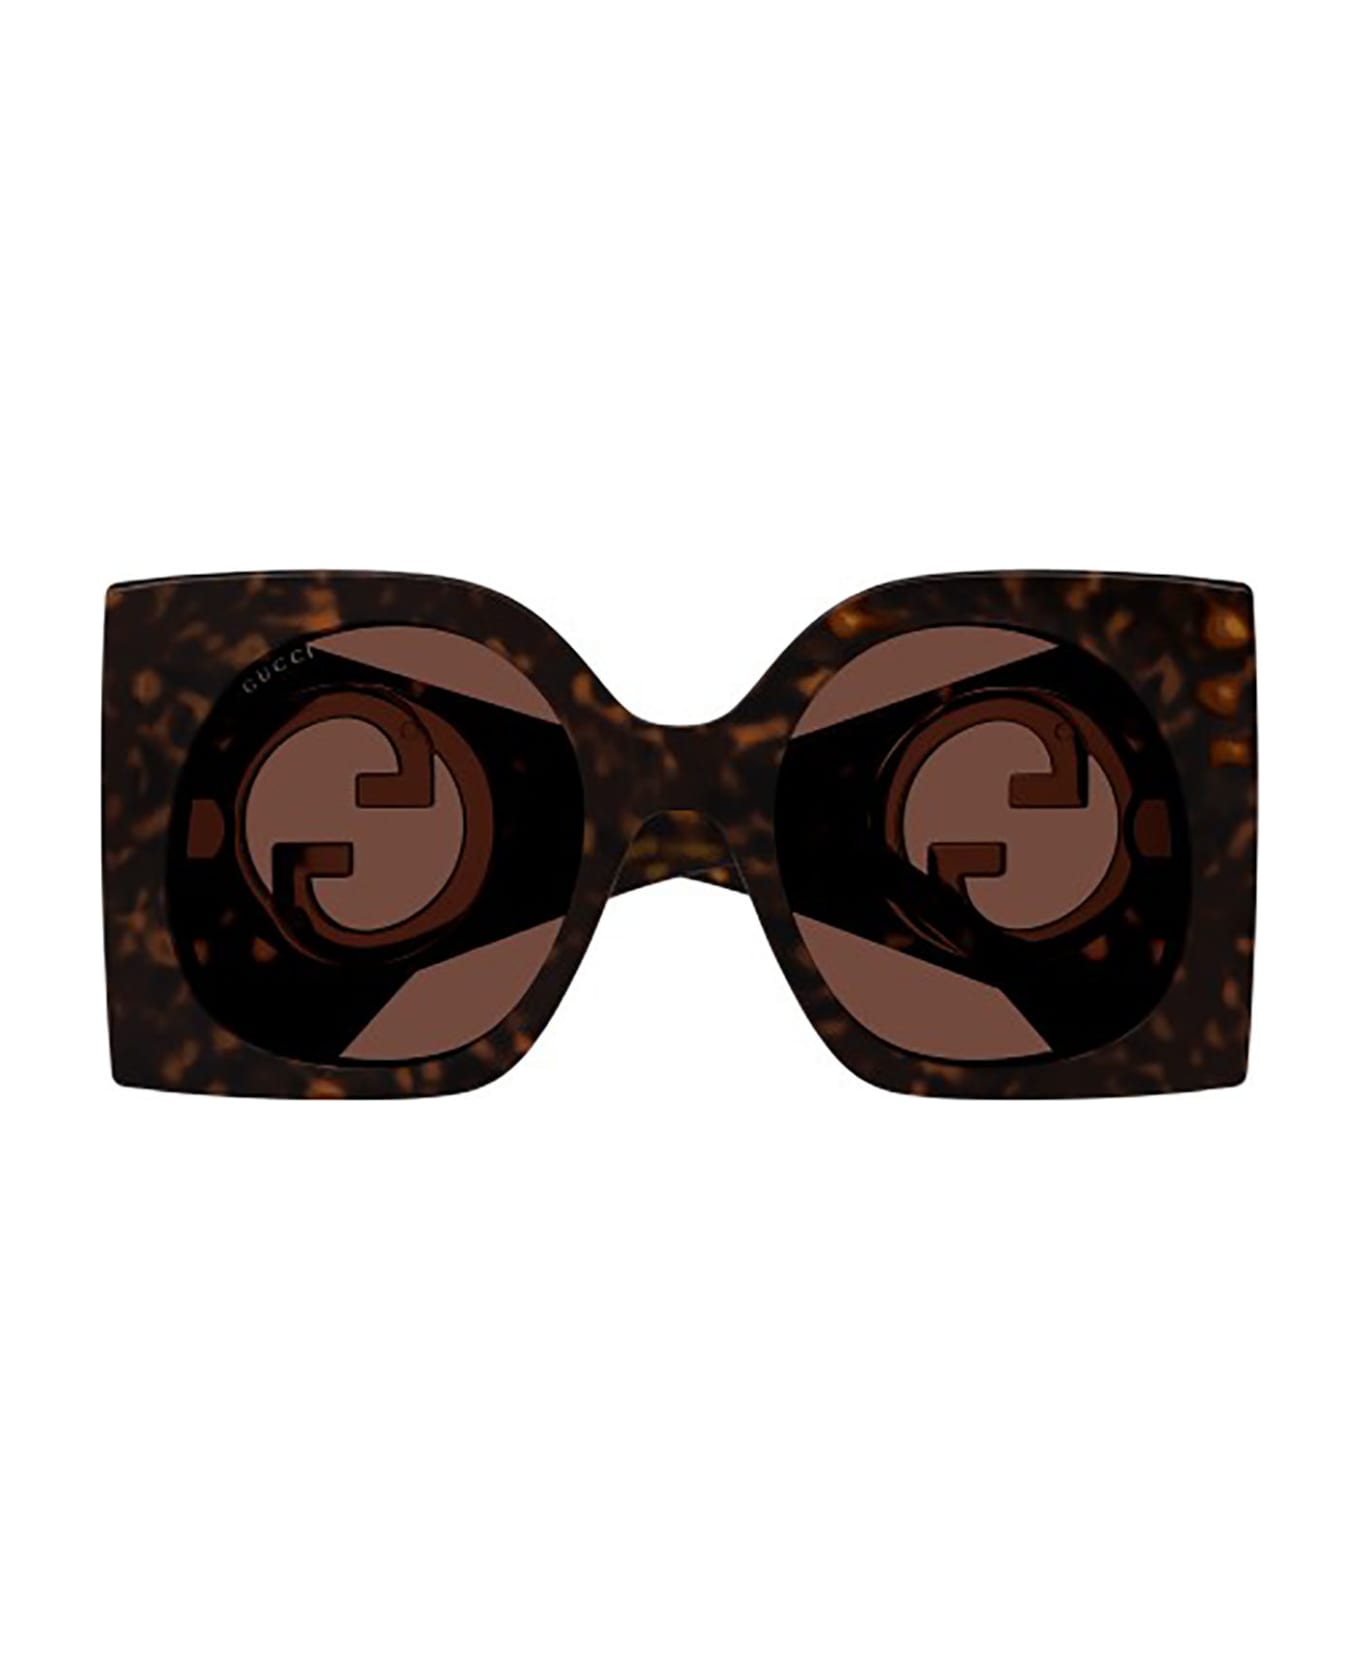 Gucci Eyewear GG1254S Sunglasses - Havana Havana Brown サングラス